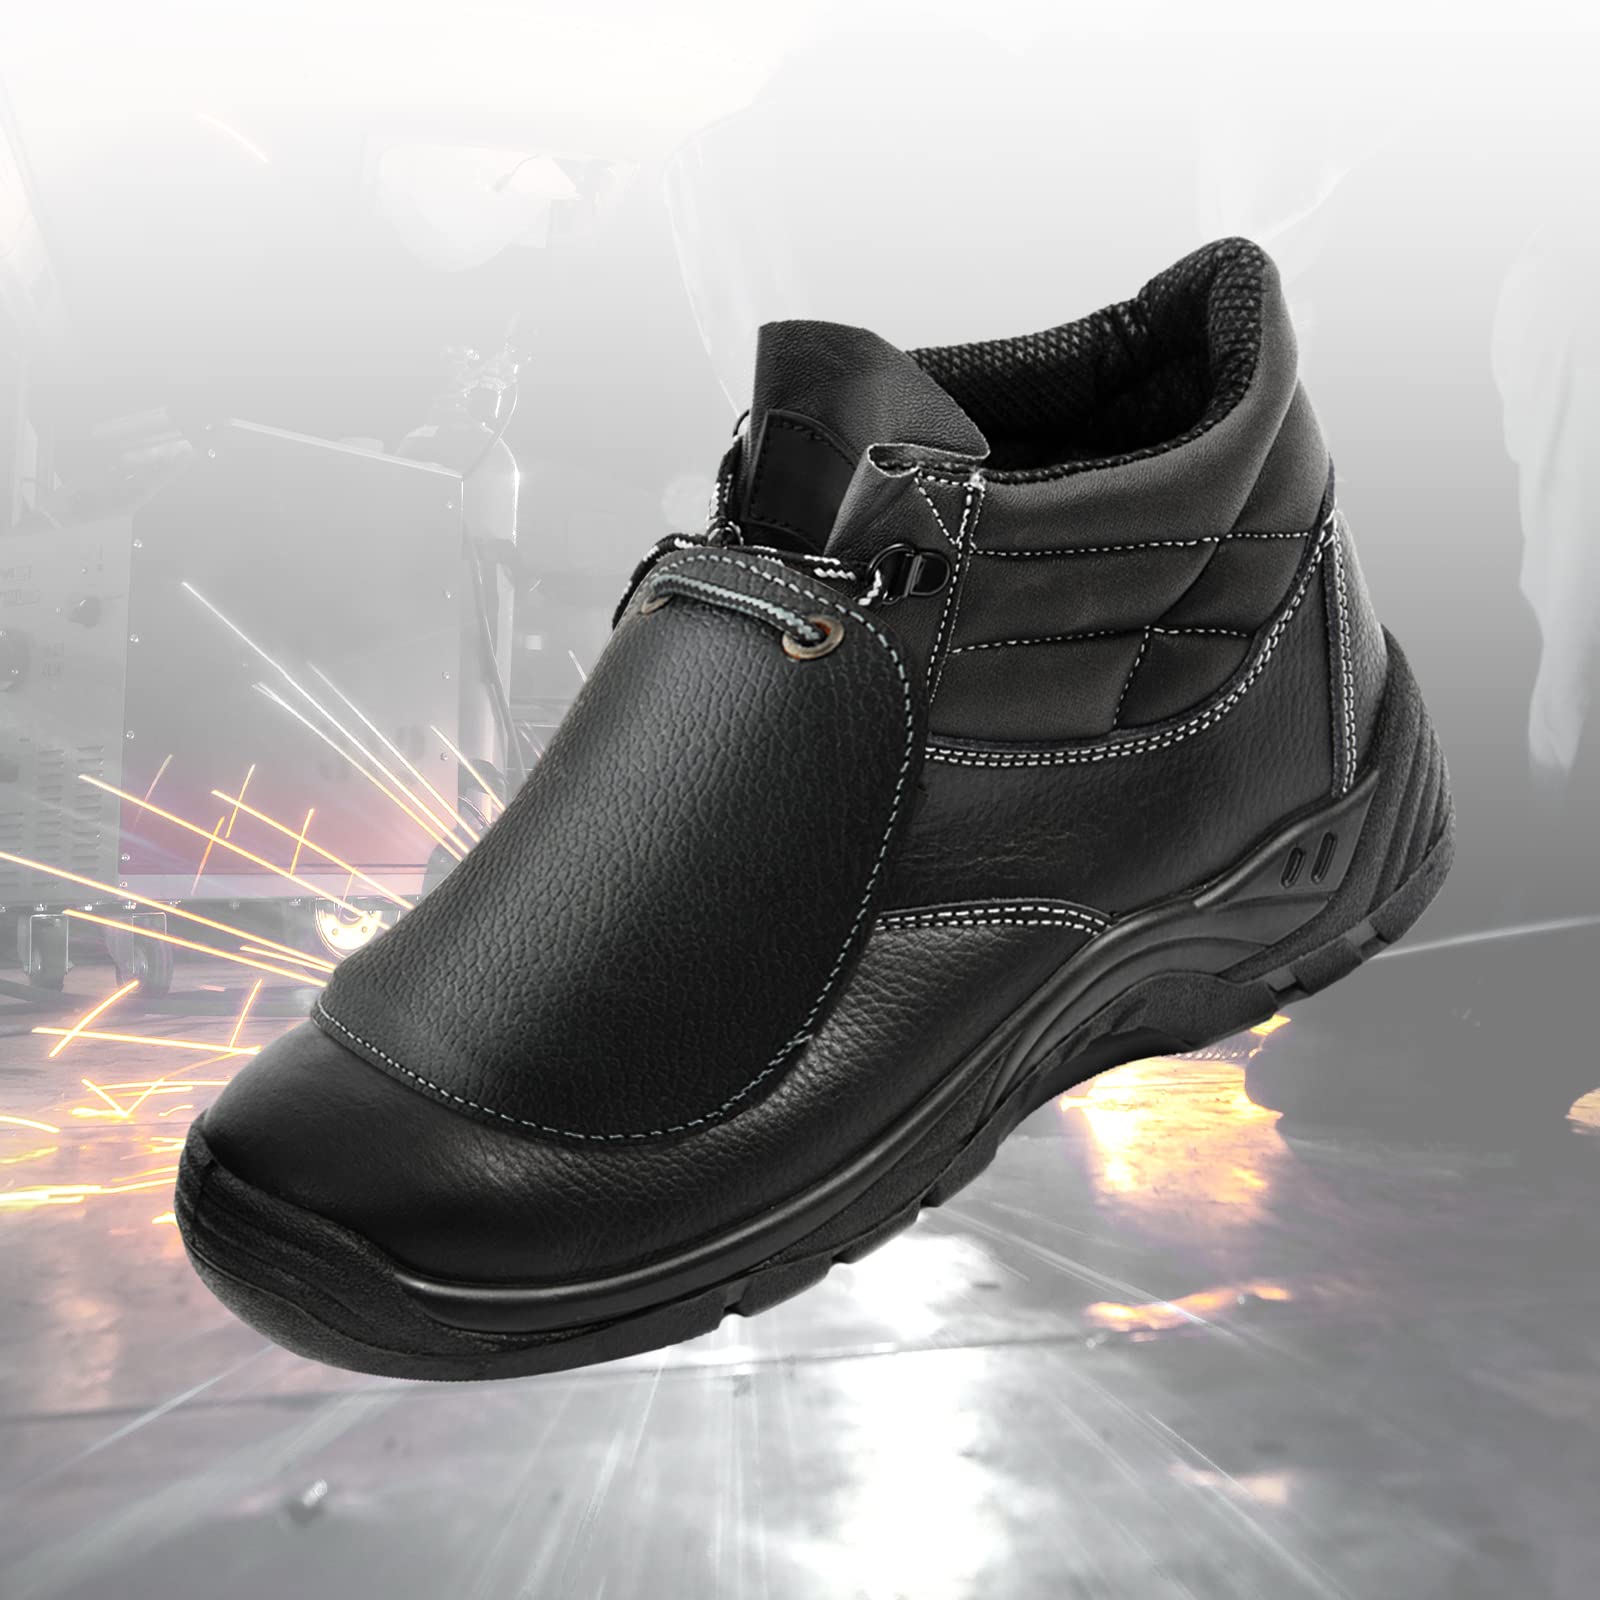 Gazechimp Metatarsal Guard Safety Footwear Attachment Shoe Cover